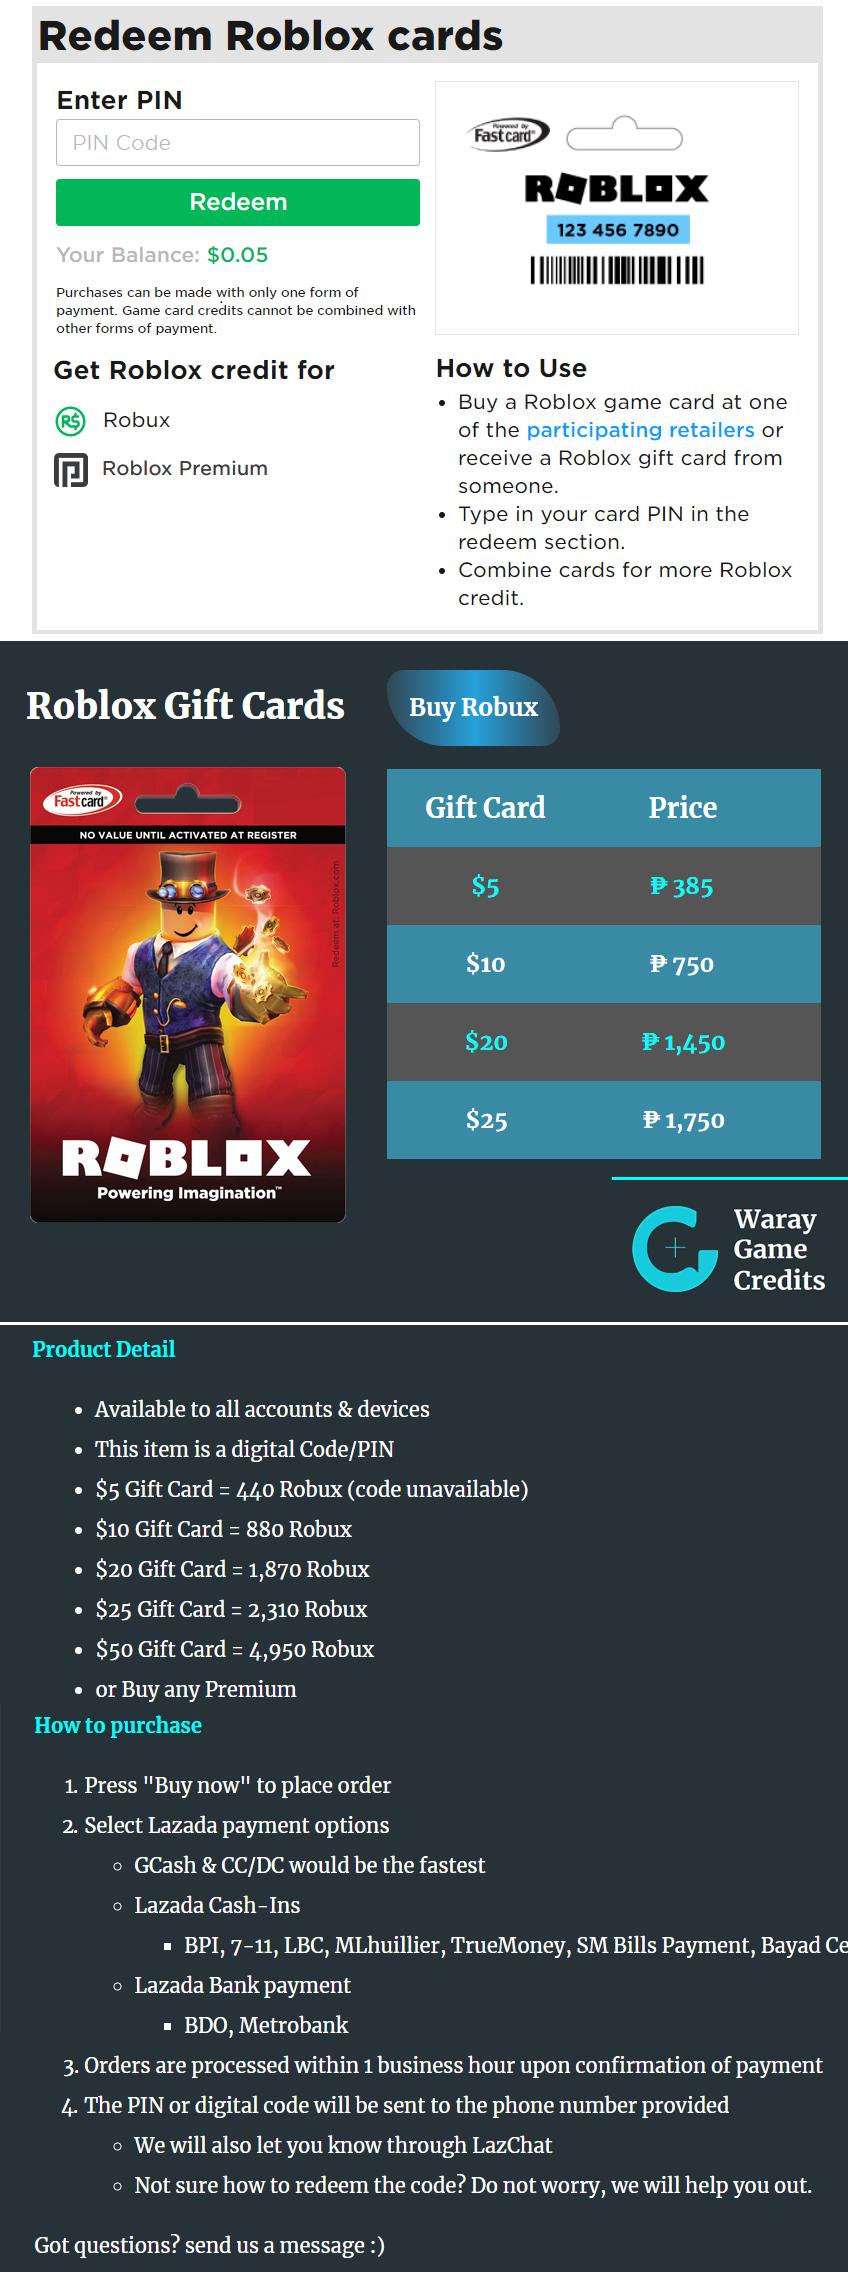 50 Roblox Gift Card 4950 Robux Premium - 15 dollar robux gift card